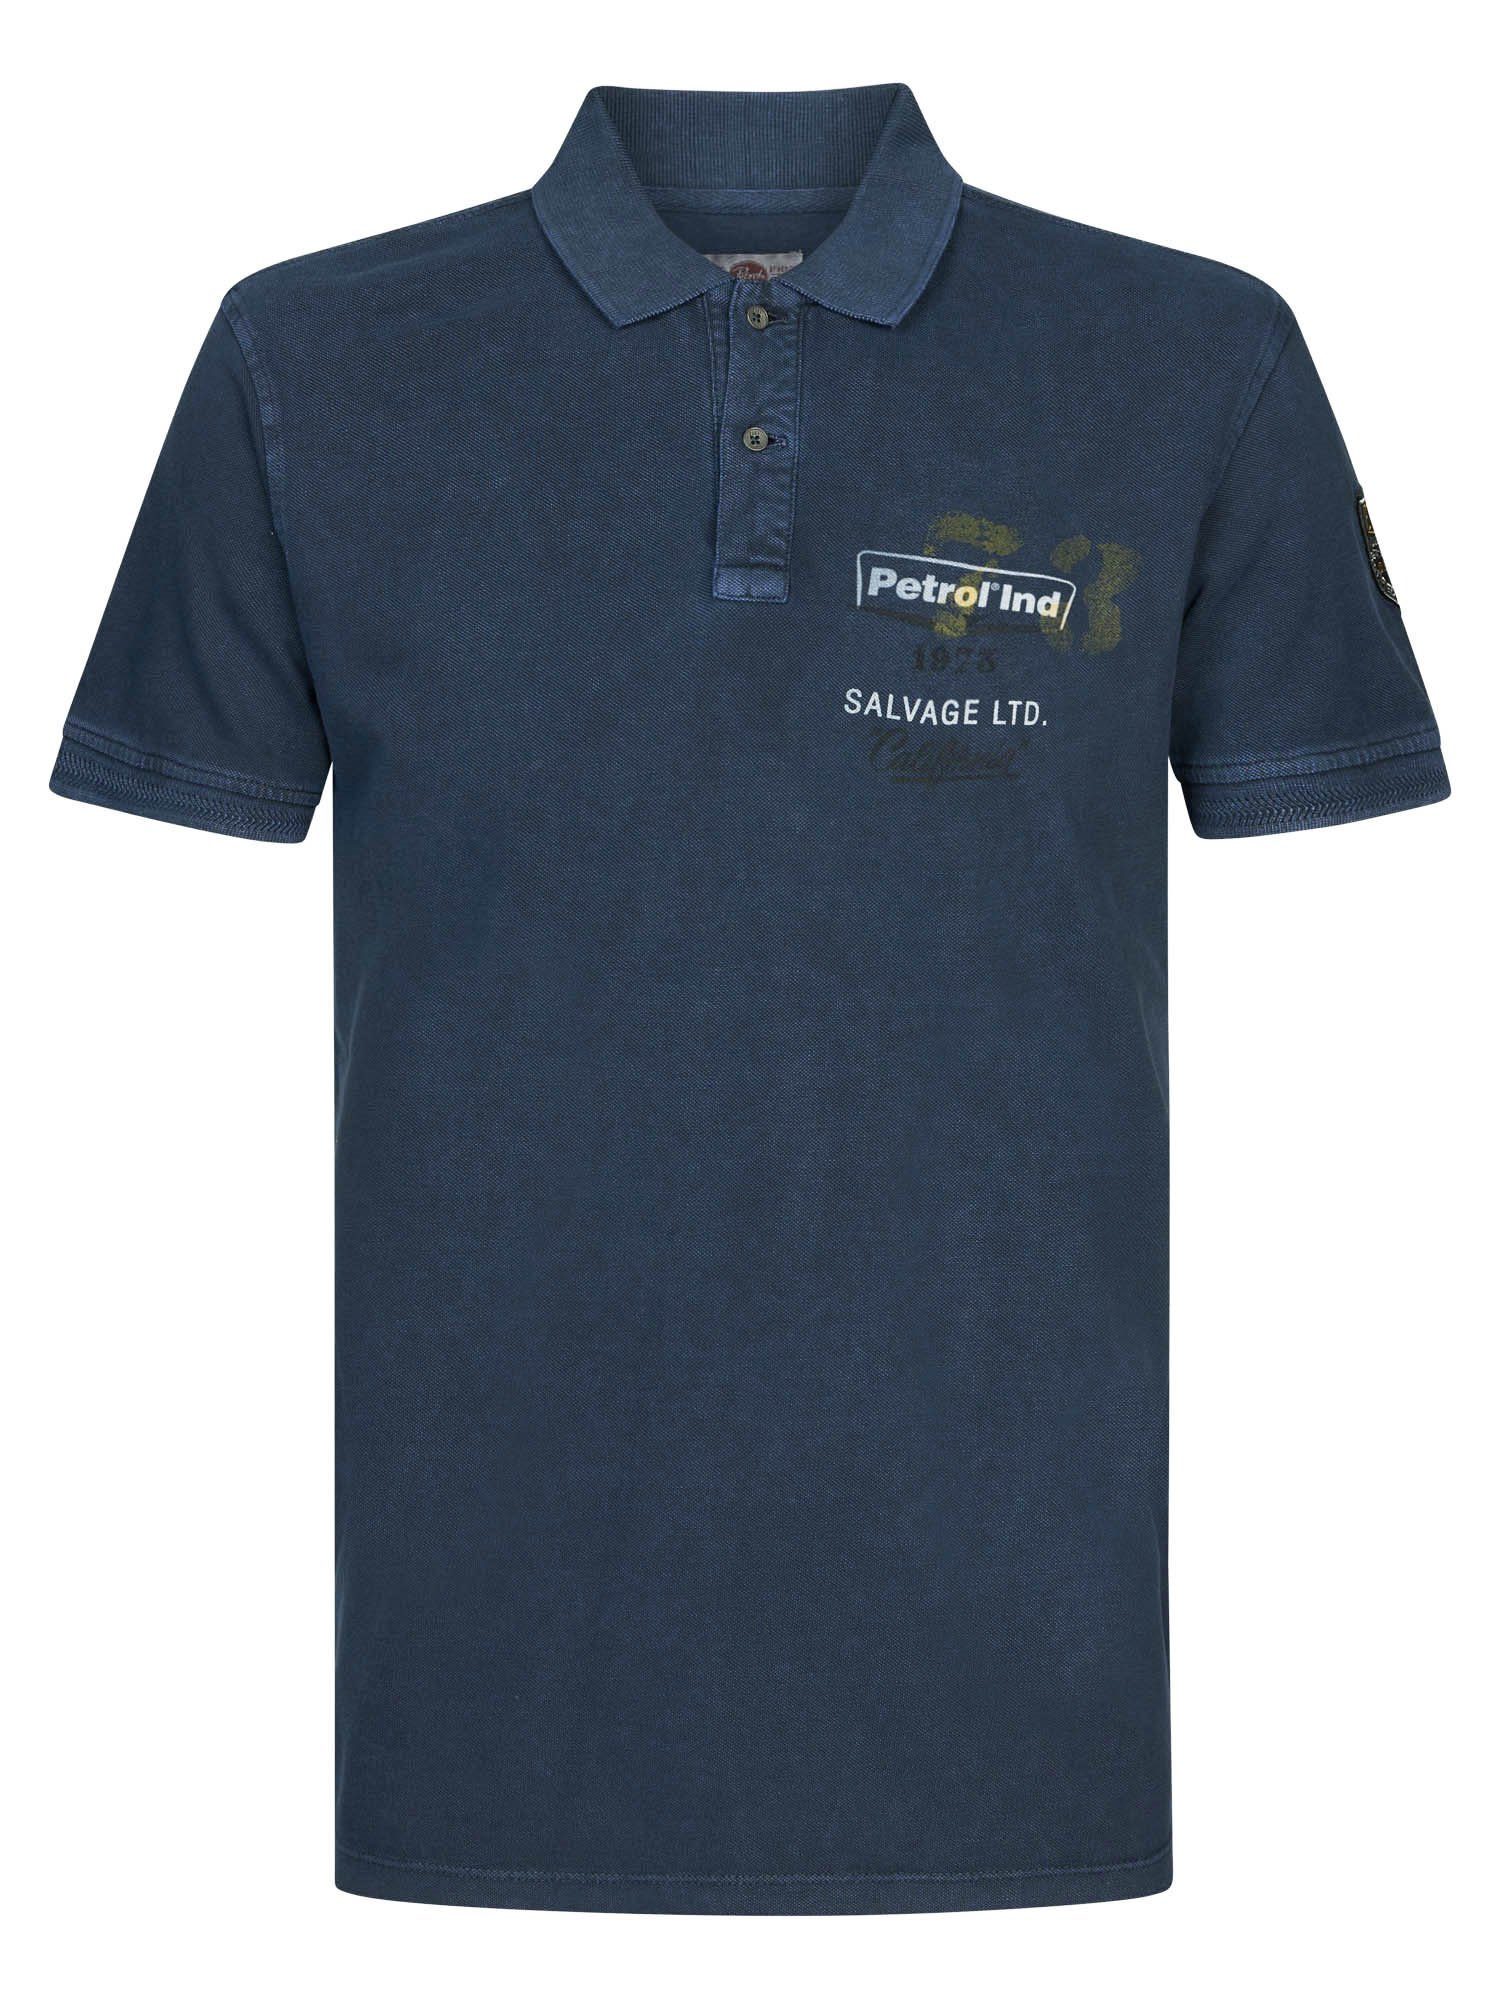 Petrol Industries Poloshirt Kurzarmshirt Poloshirt dunkelblau Polo